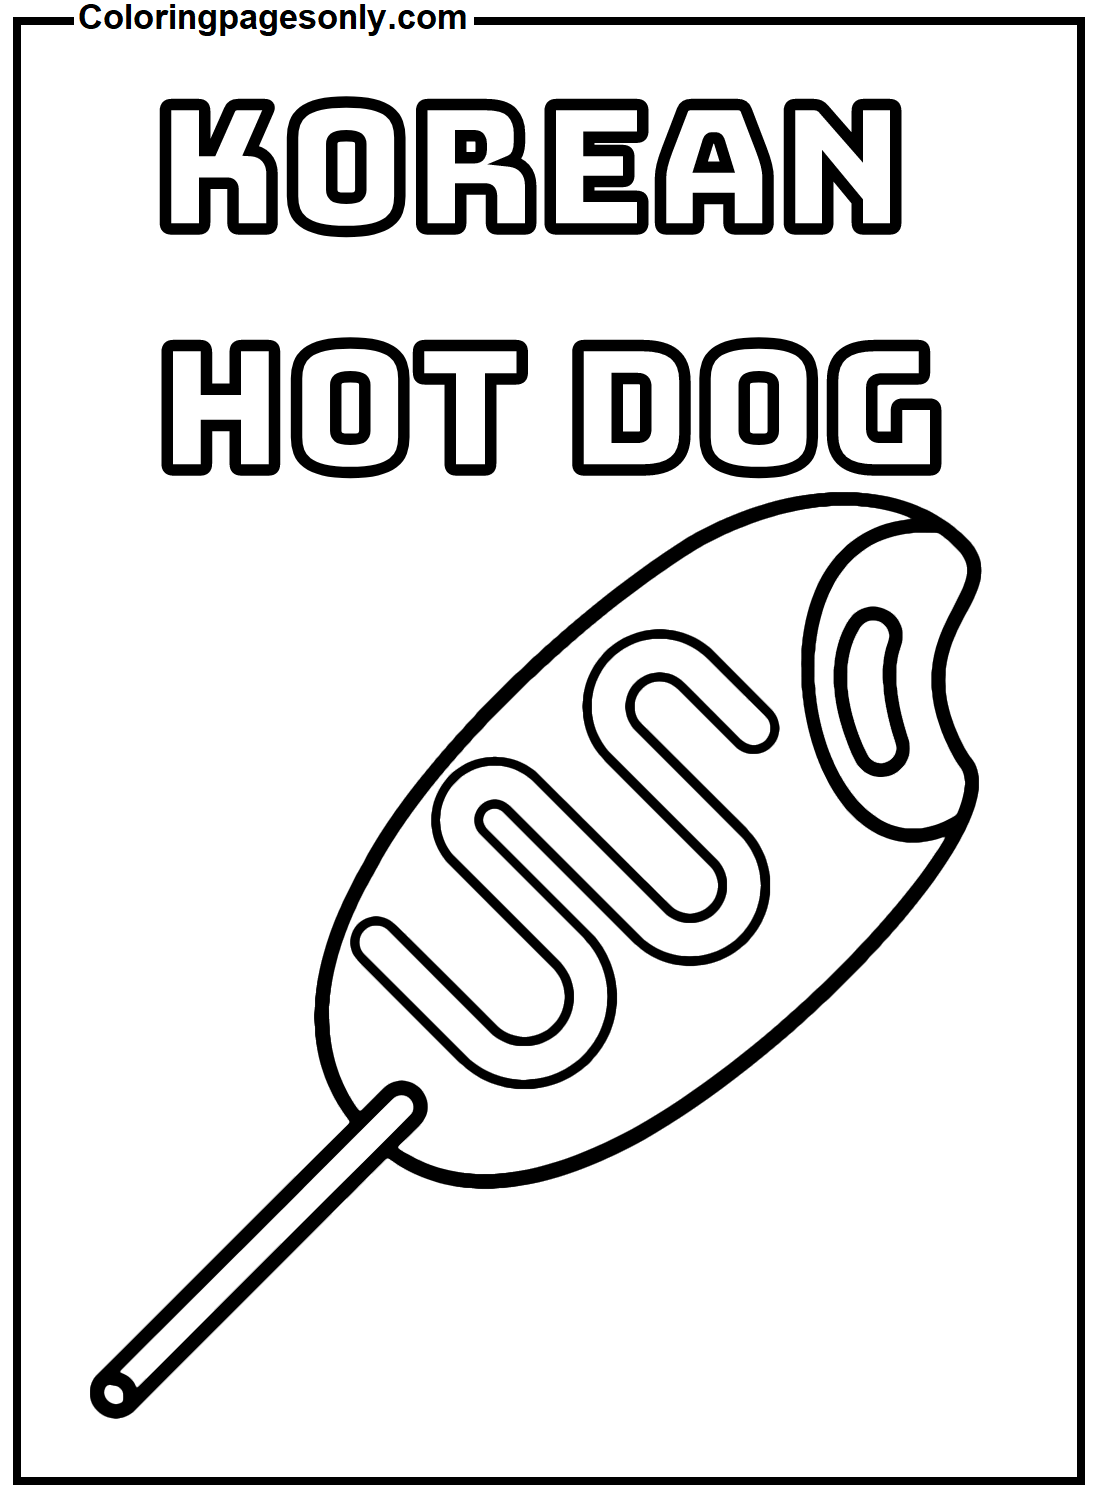 Hot Dog 的韩国热狗